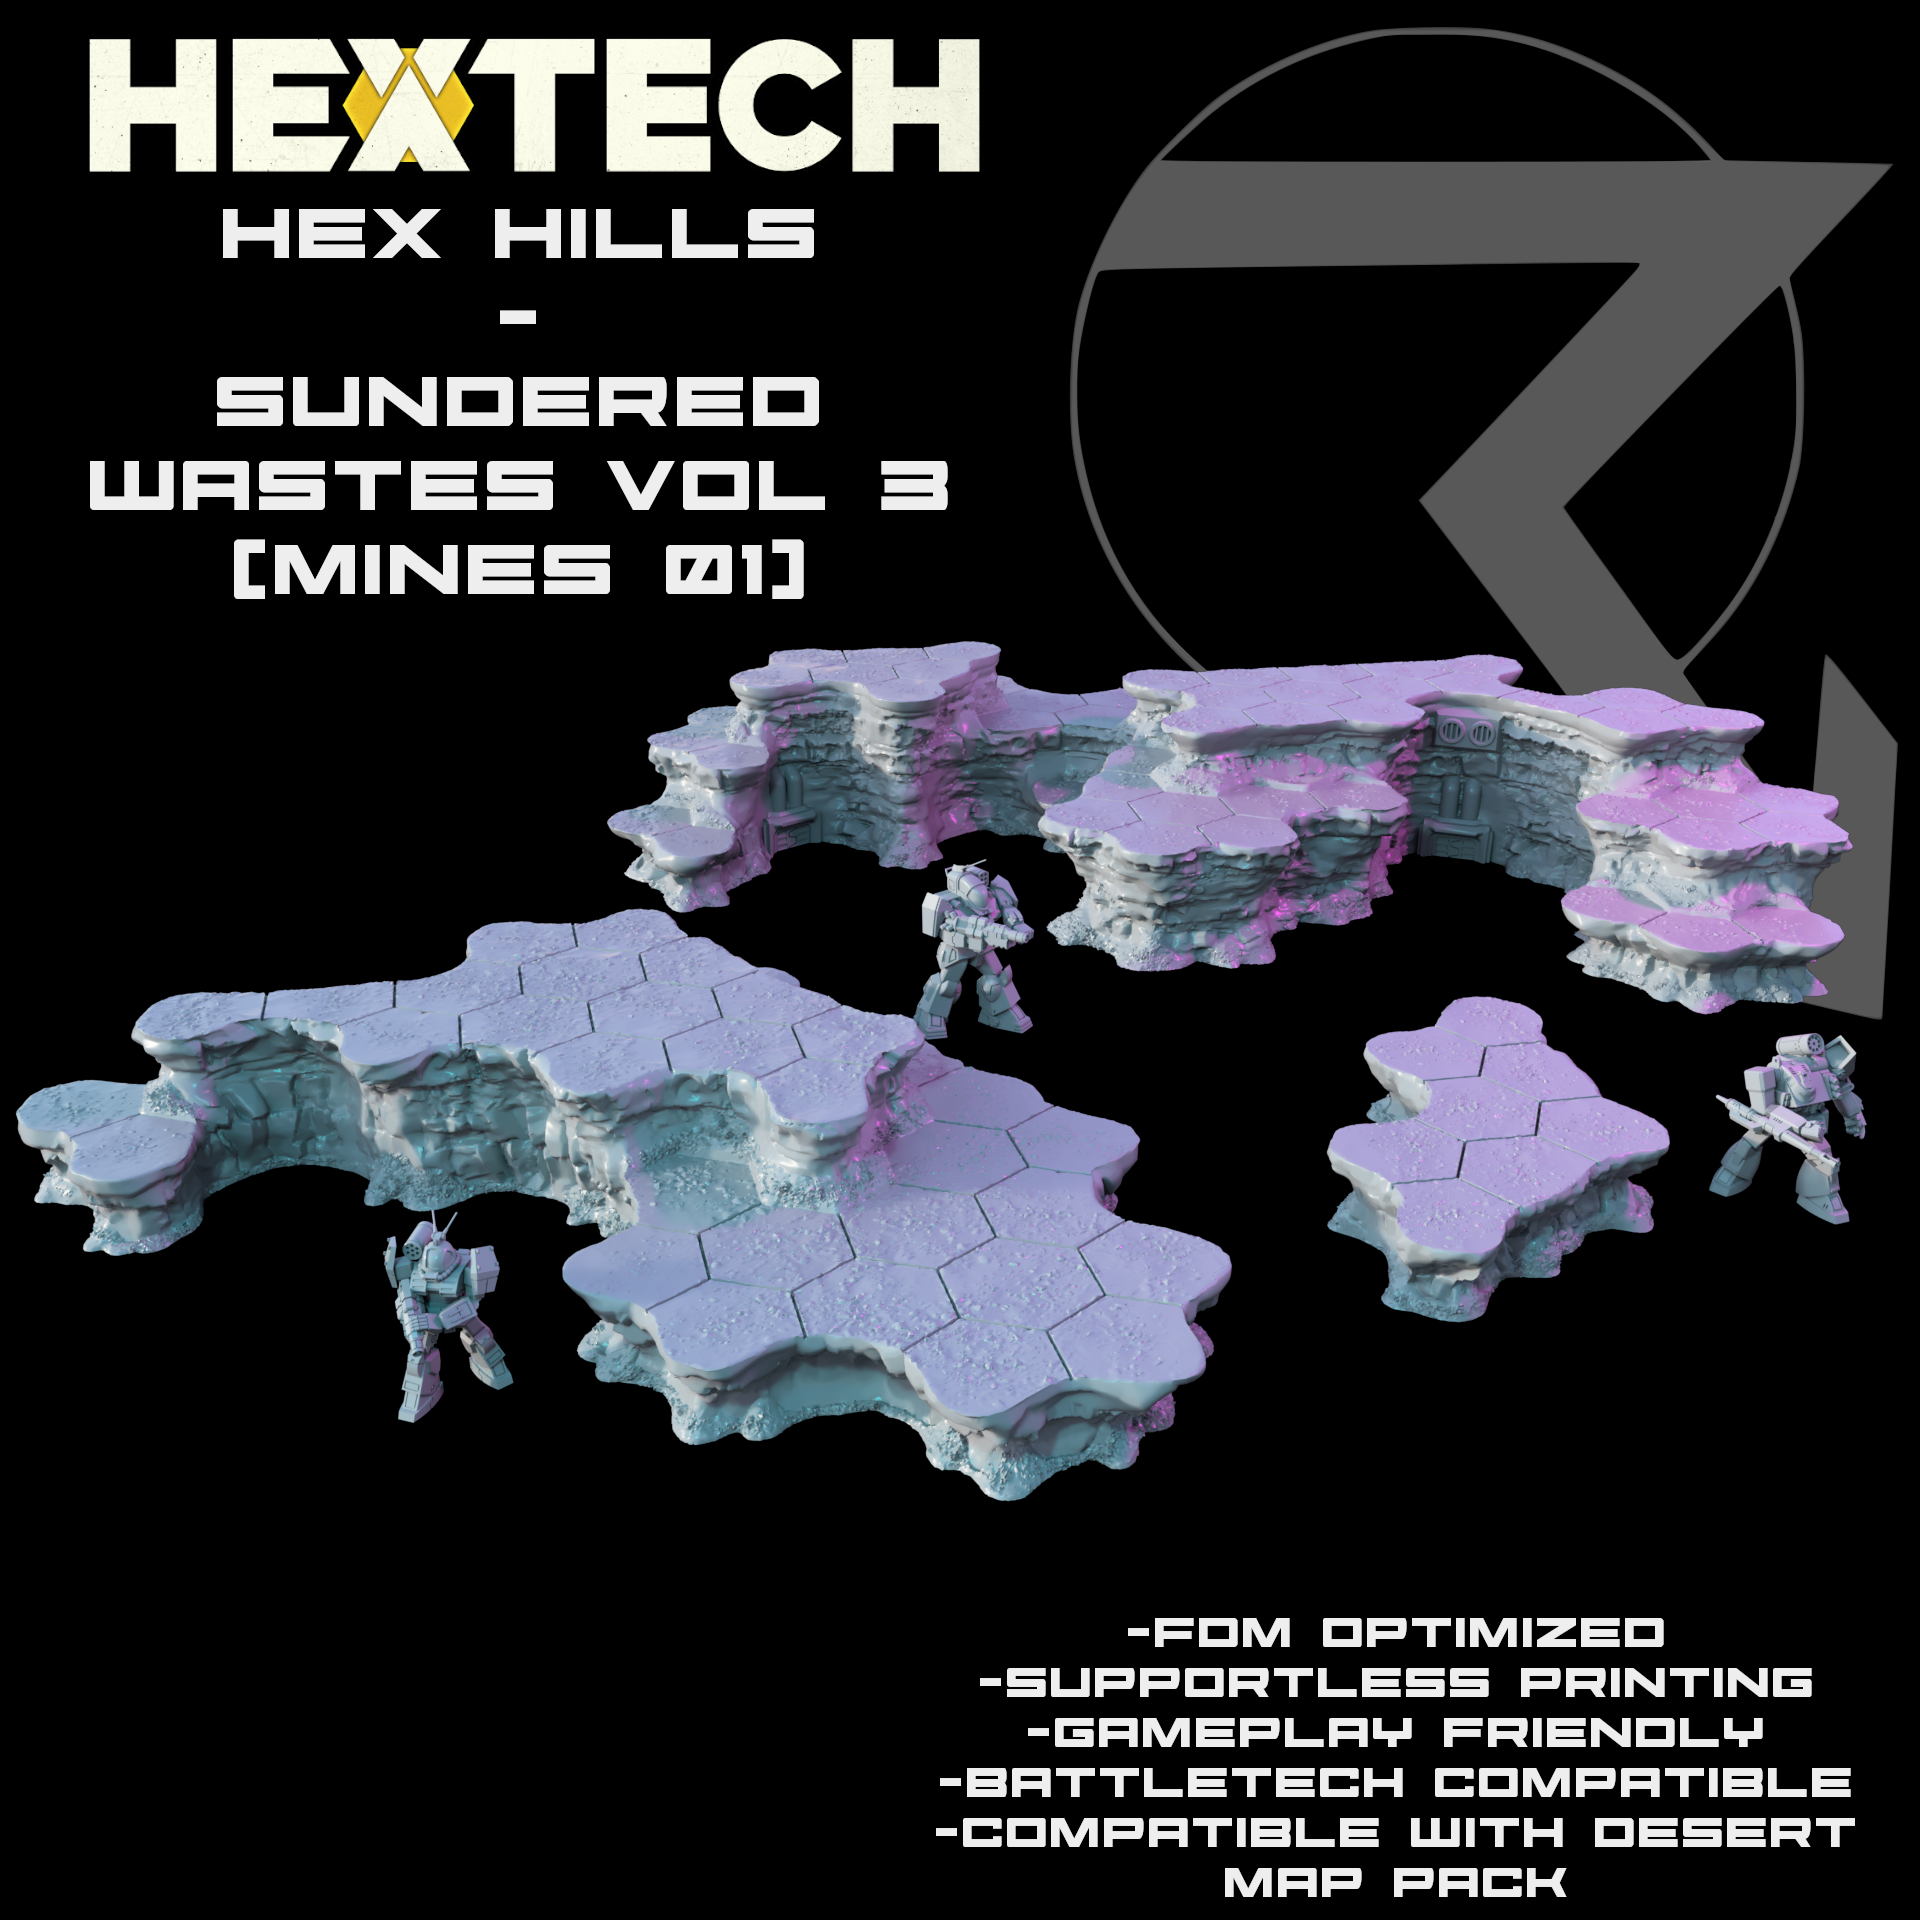 HEXTECH Sundered Wastes Vol 3 Bundle for Battletech